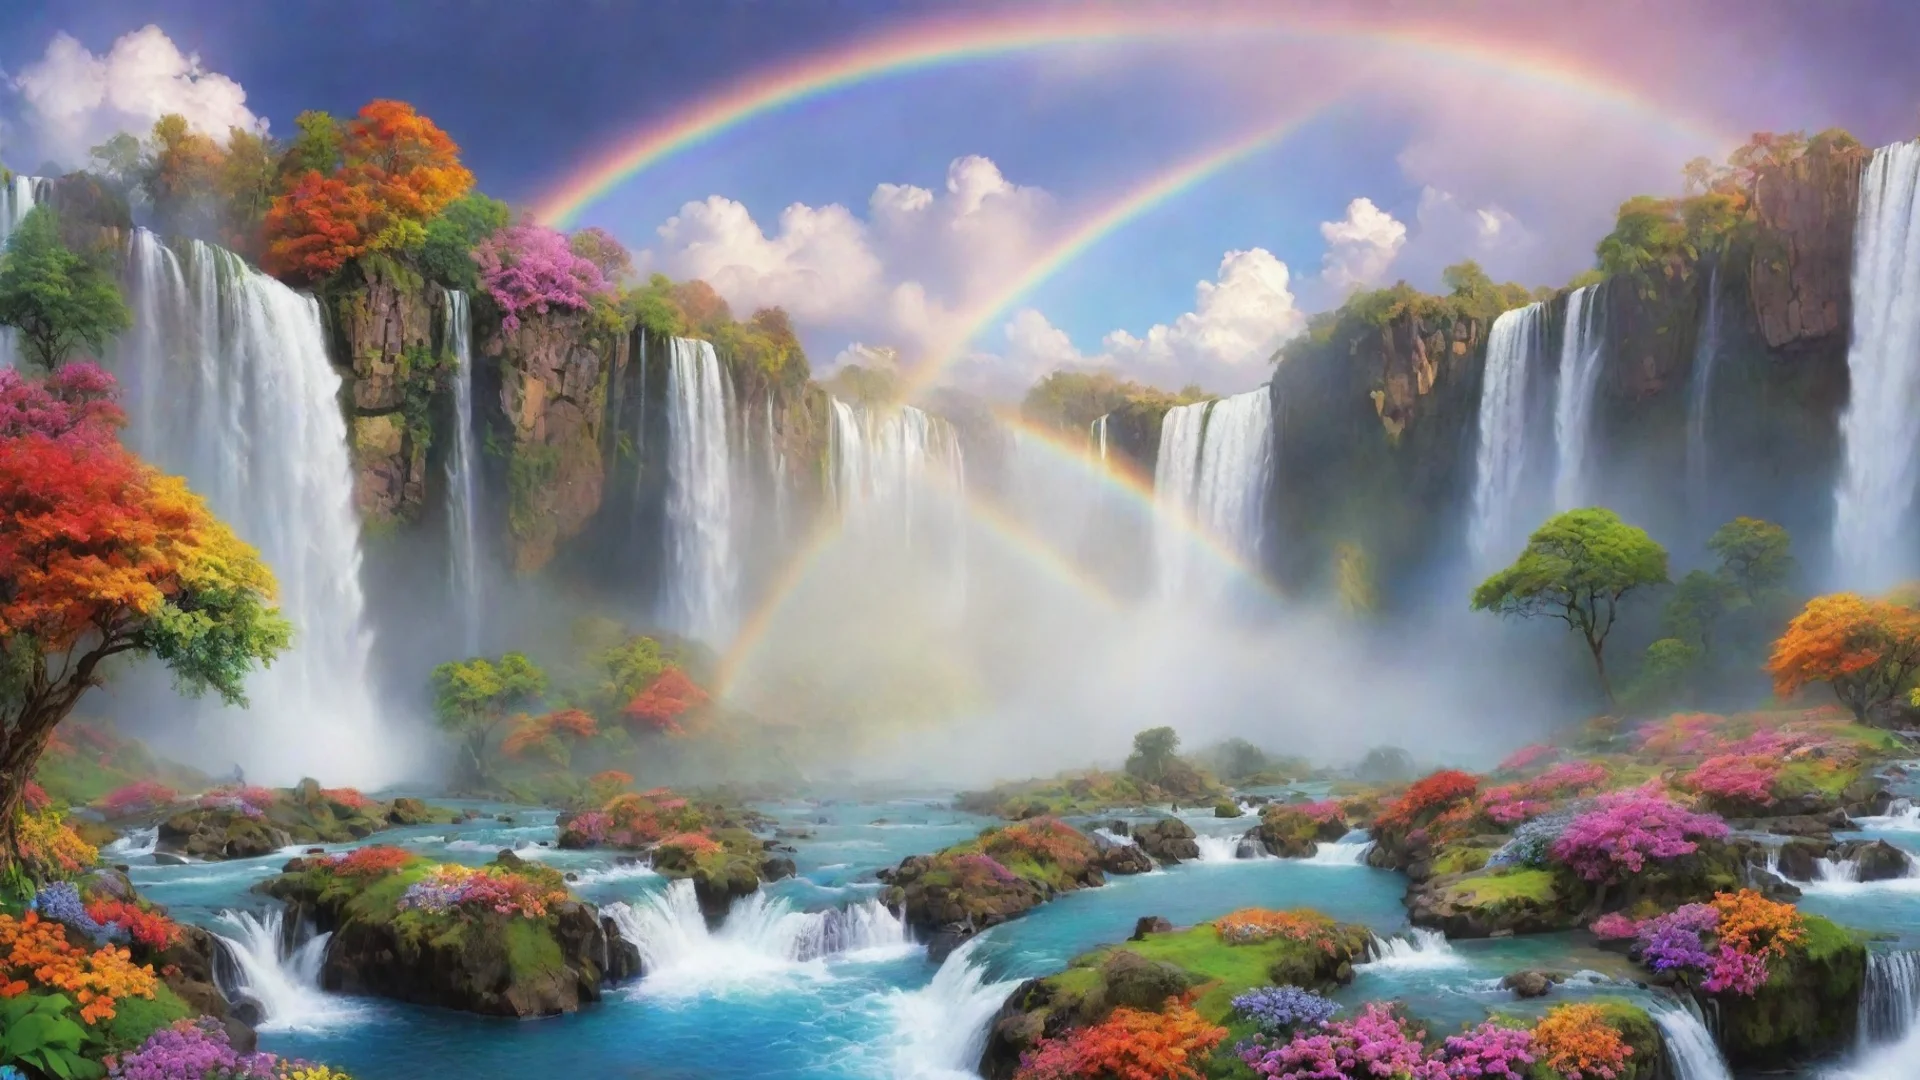 dreamy colorful landscape alian world amazing beautiful utopian colors flowers waterfalls rainbows clouds wide